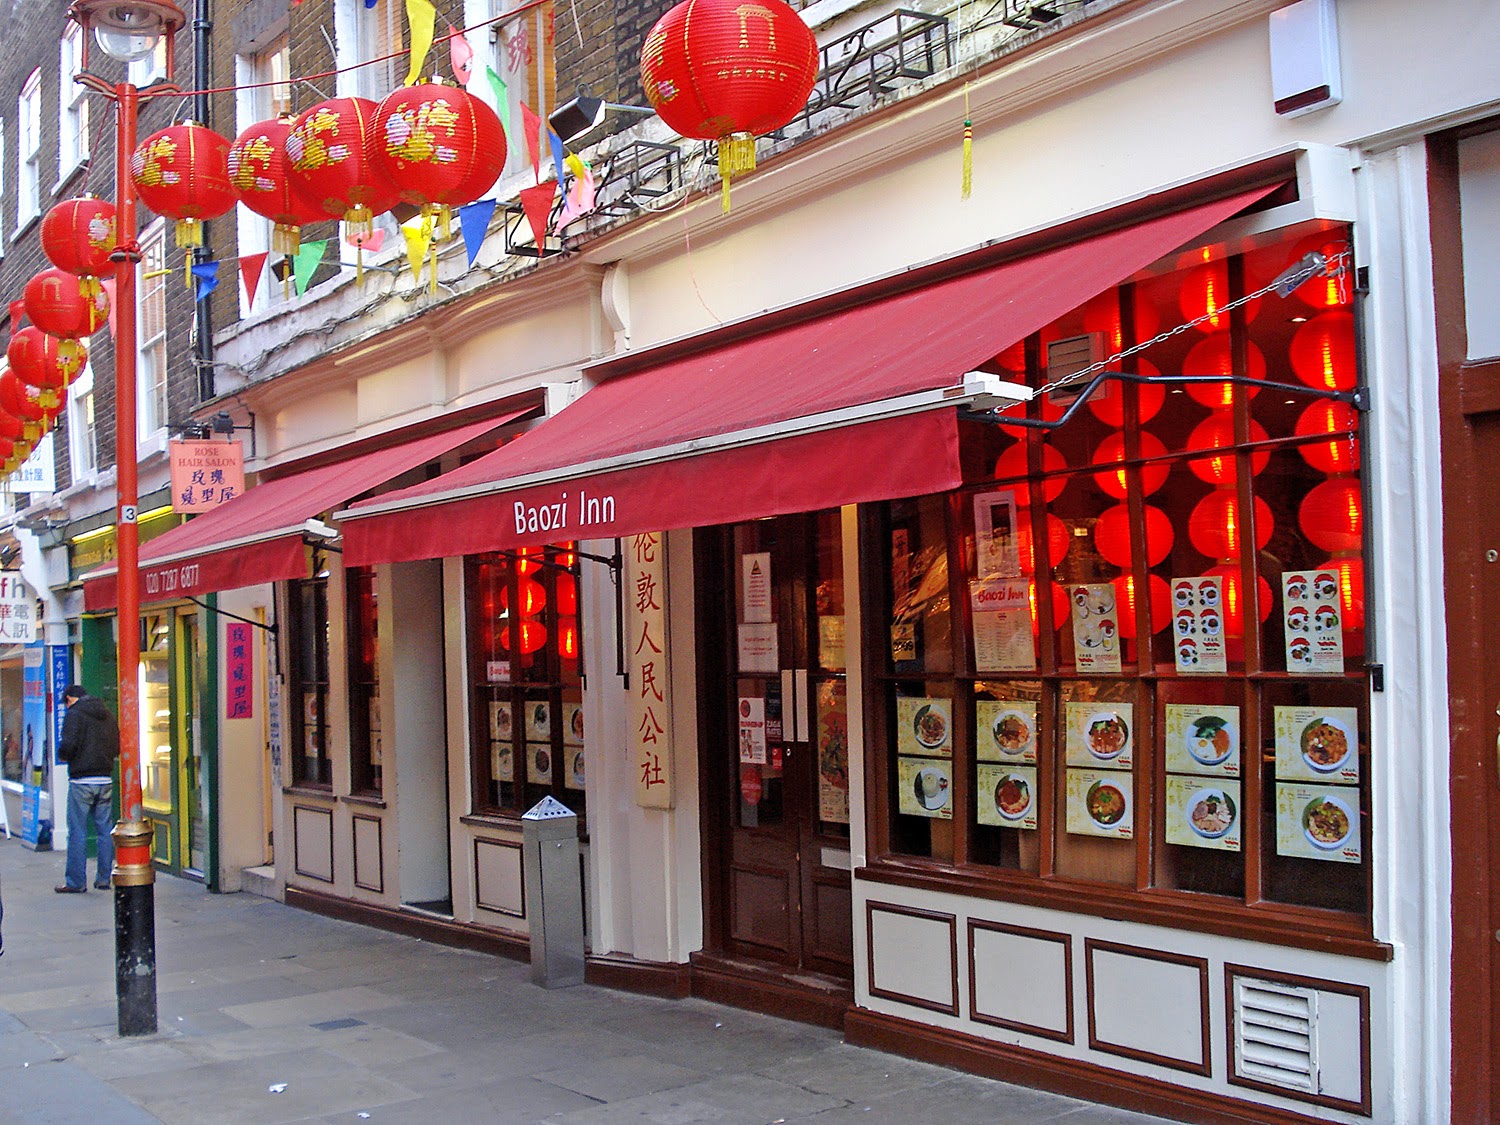 Baozi Inn Chinatown Chinese Restaurant - Britain All Over Travel Guide